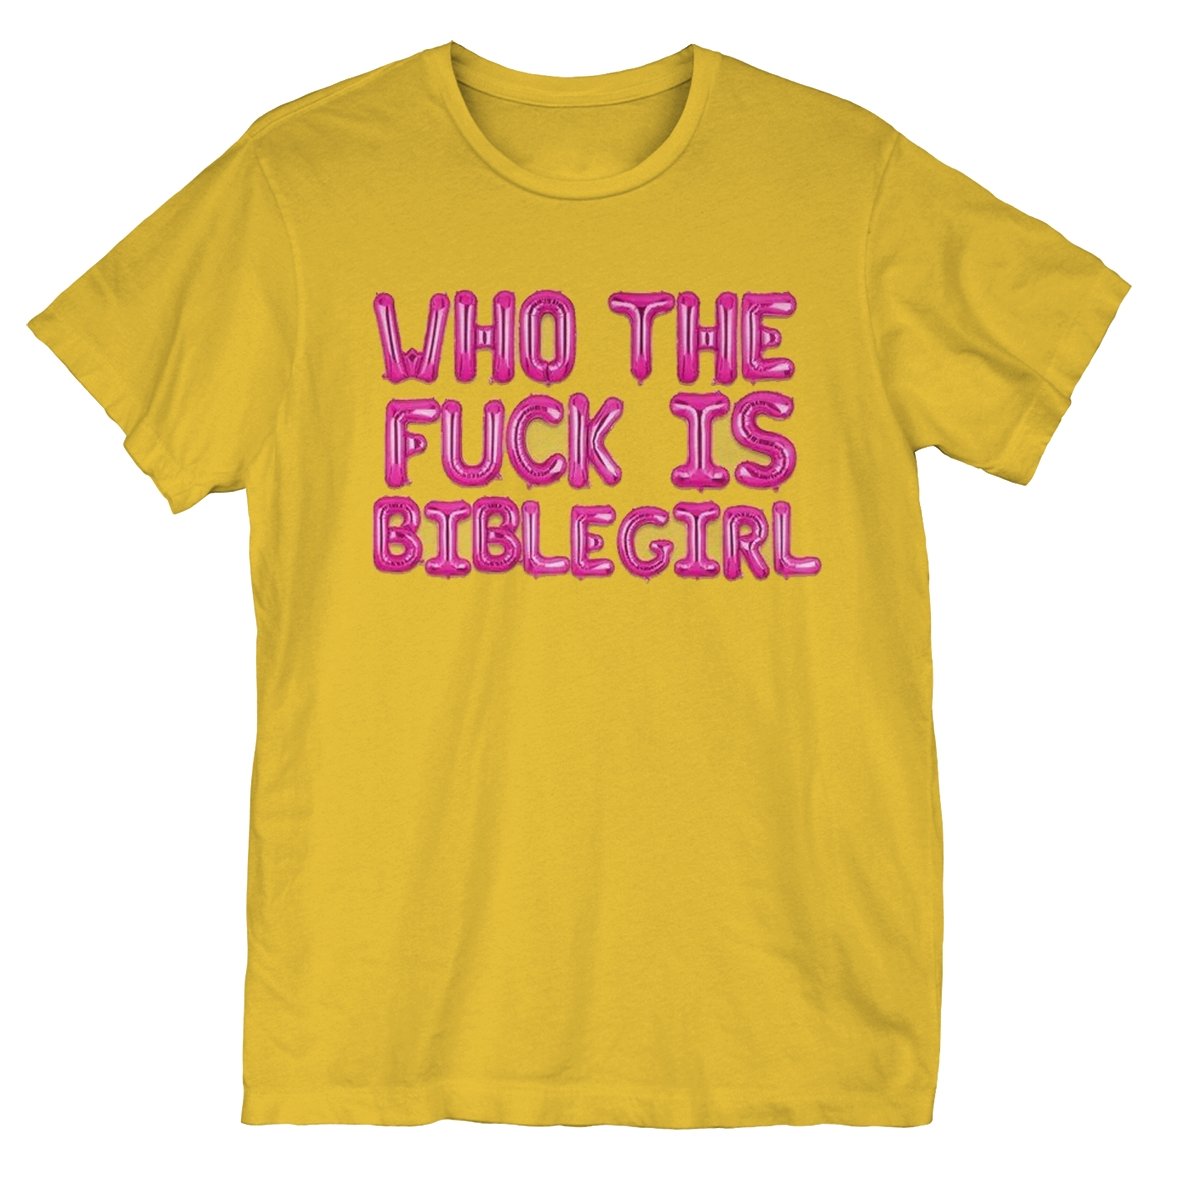 Biblegirl - Who the TF is? T-Shirt - dragqueenmerch